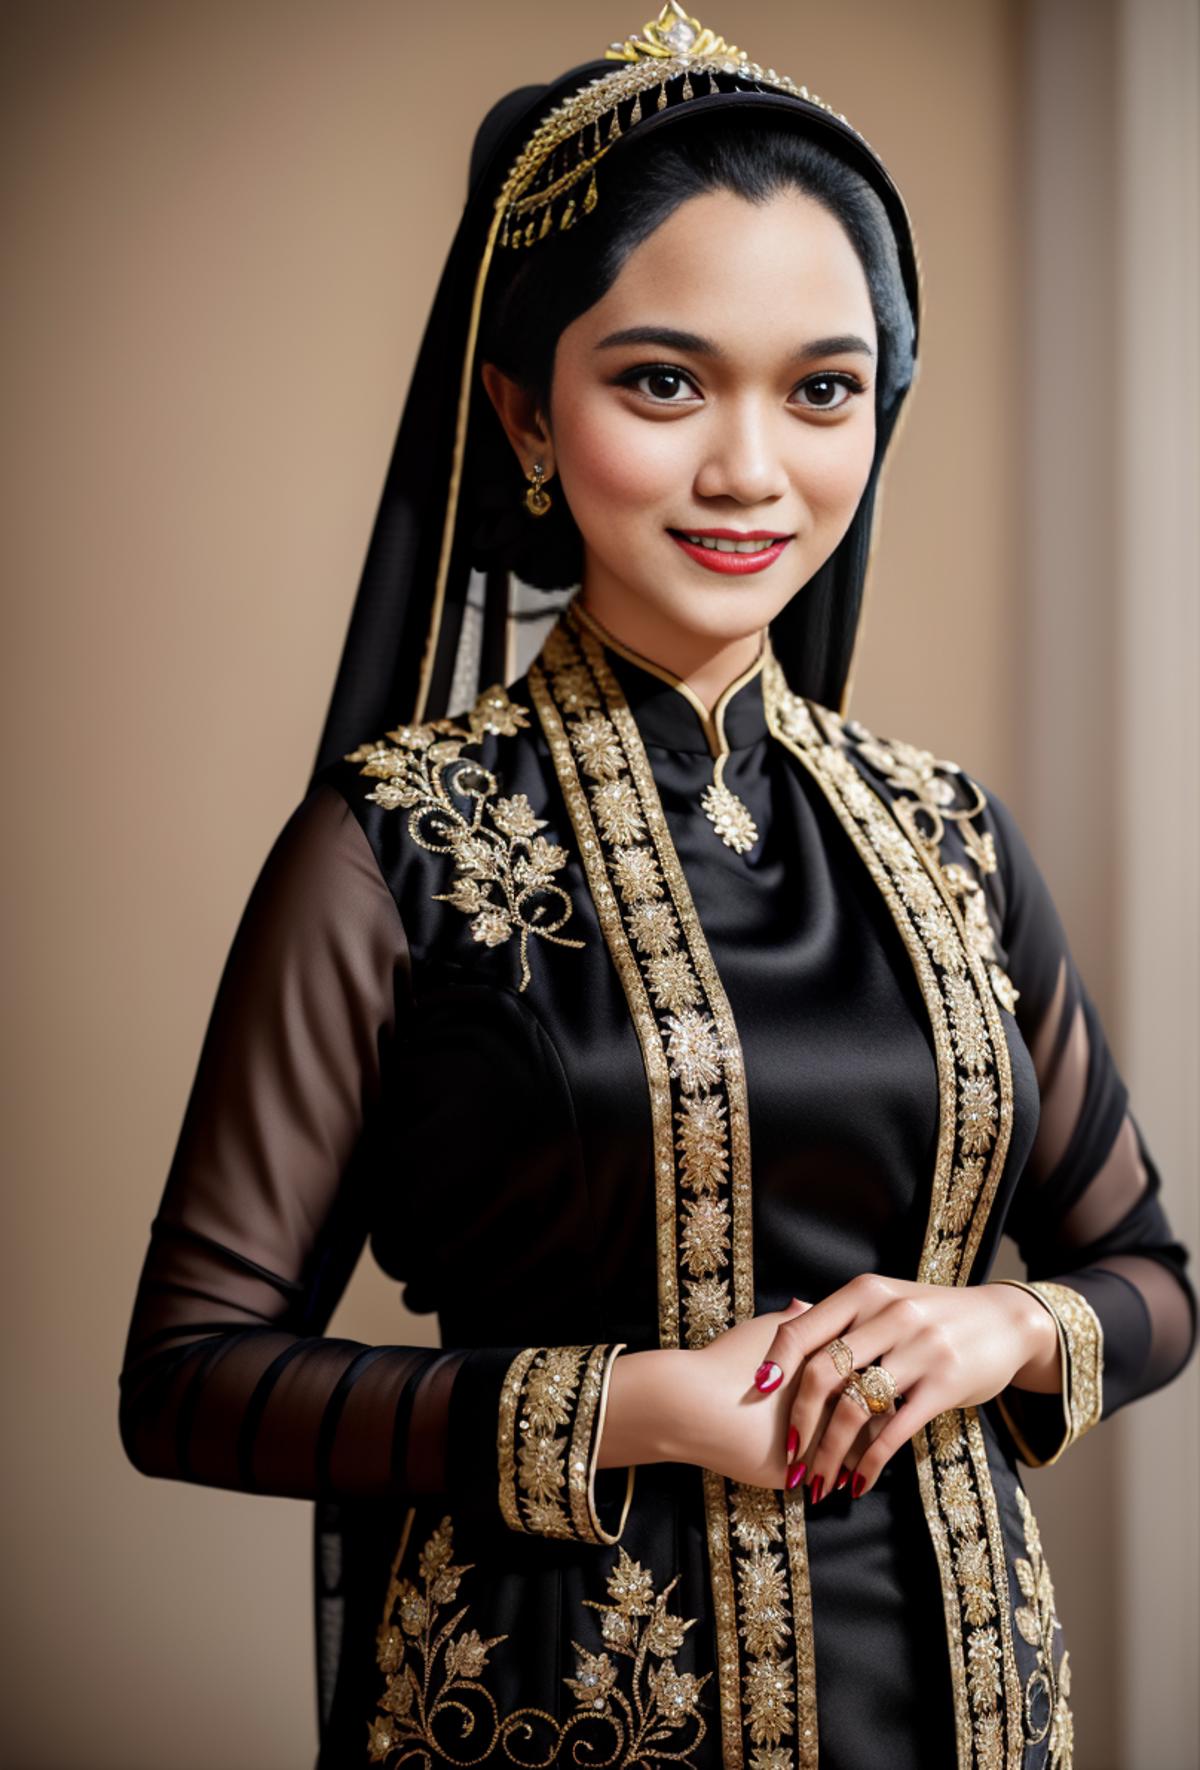 Javanese Traditional Women's Wedding Dress (Indonesia) image by brokolies